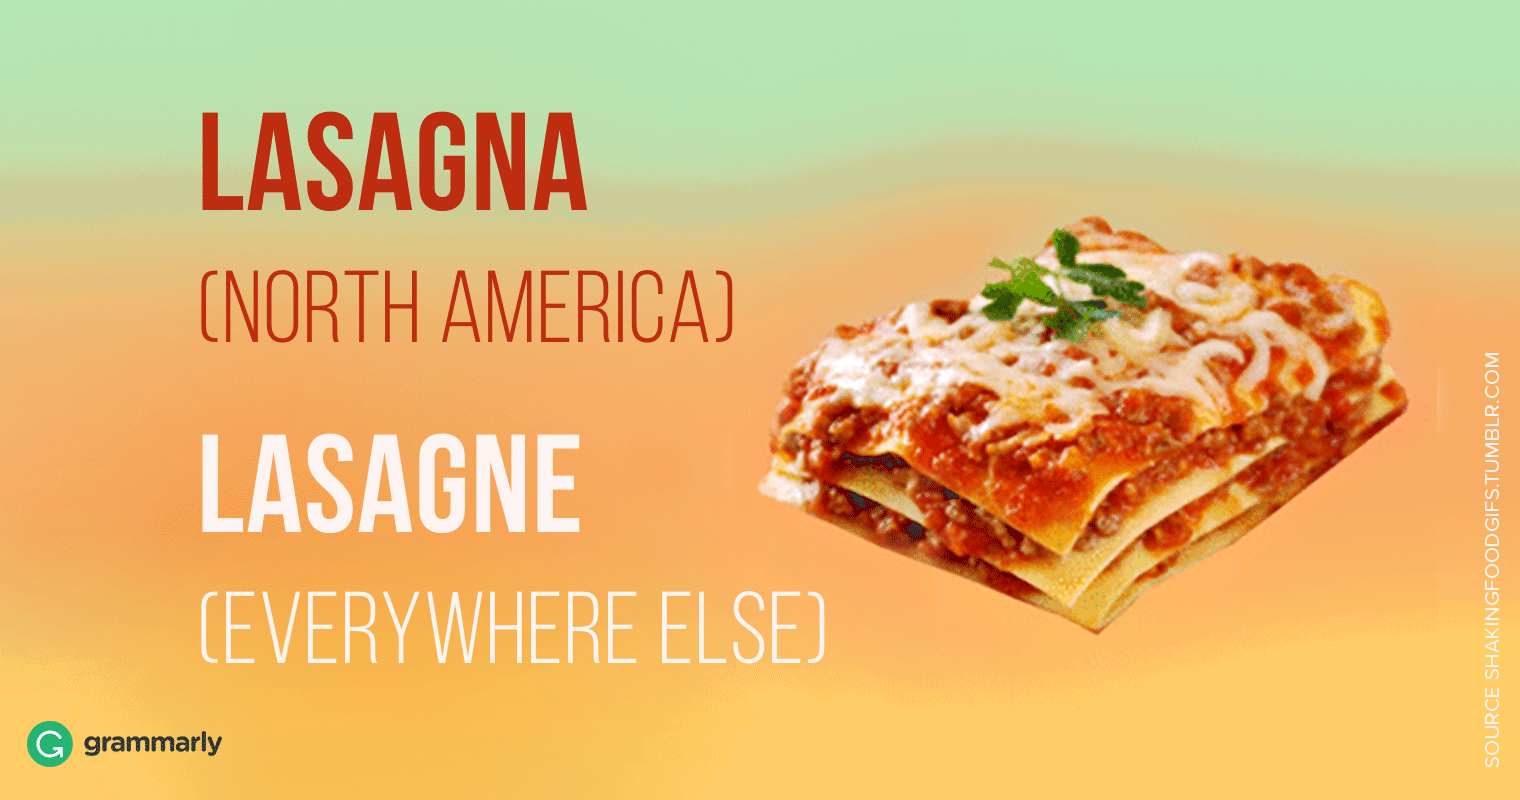 lasagna.gif